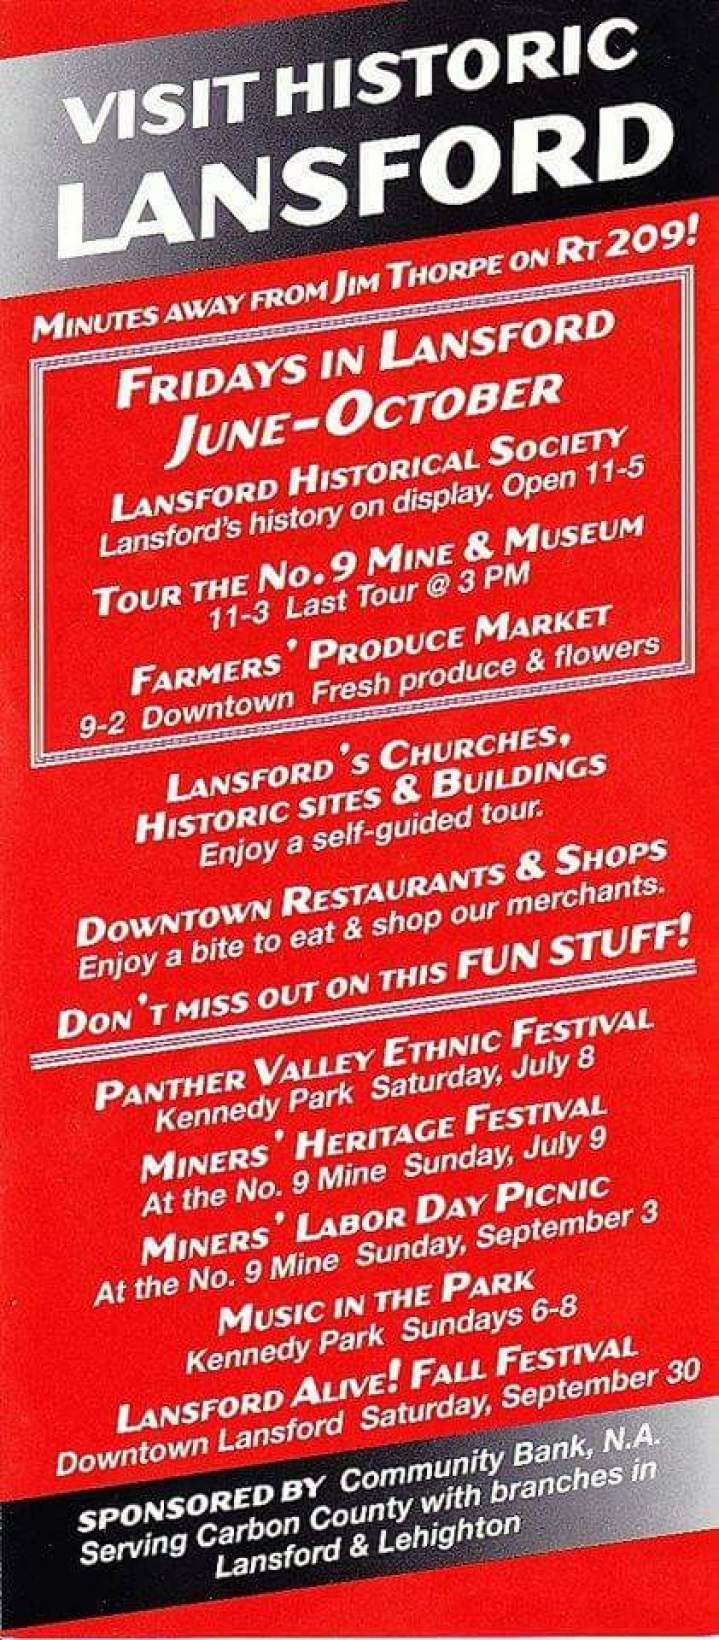 Visit Historic Lansford PA